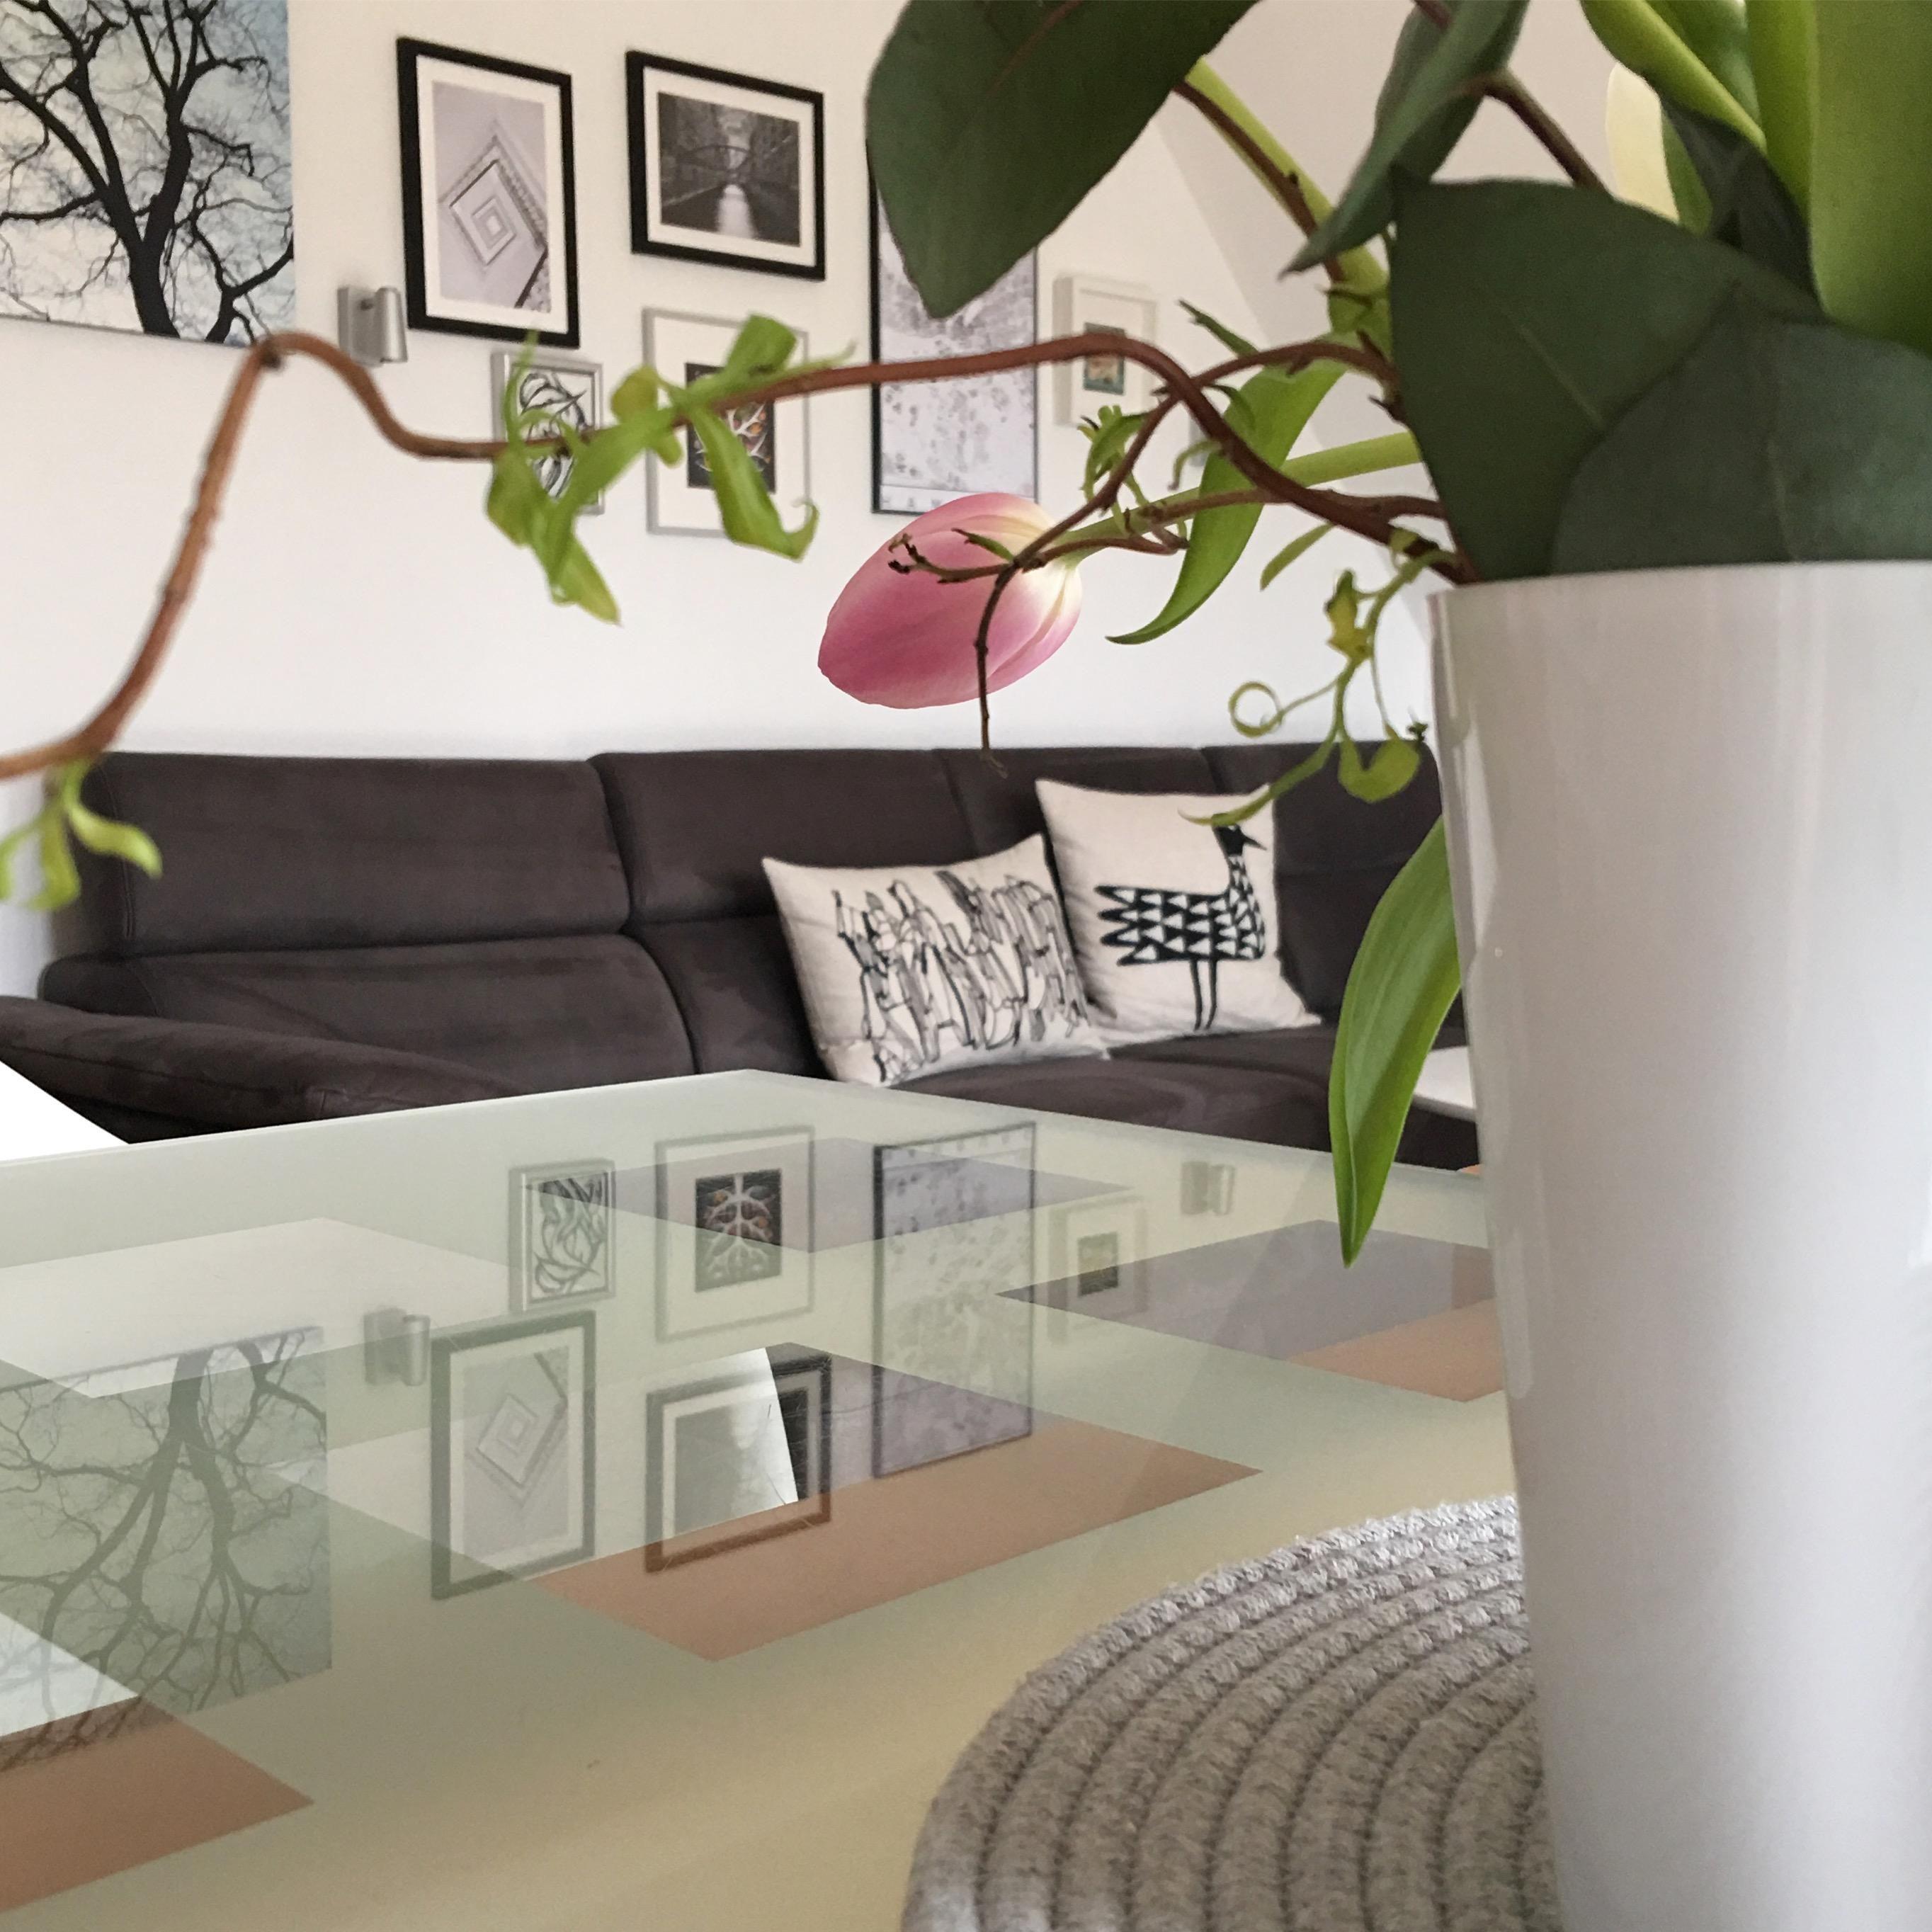 #wohnzimmer #livingroom #view #blickwinkel #homedecor #home #myhome #ftühlingsblumen